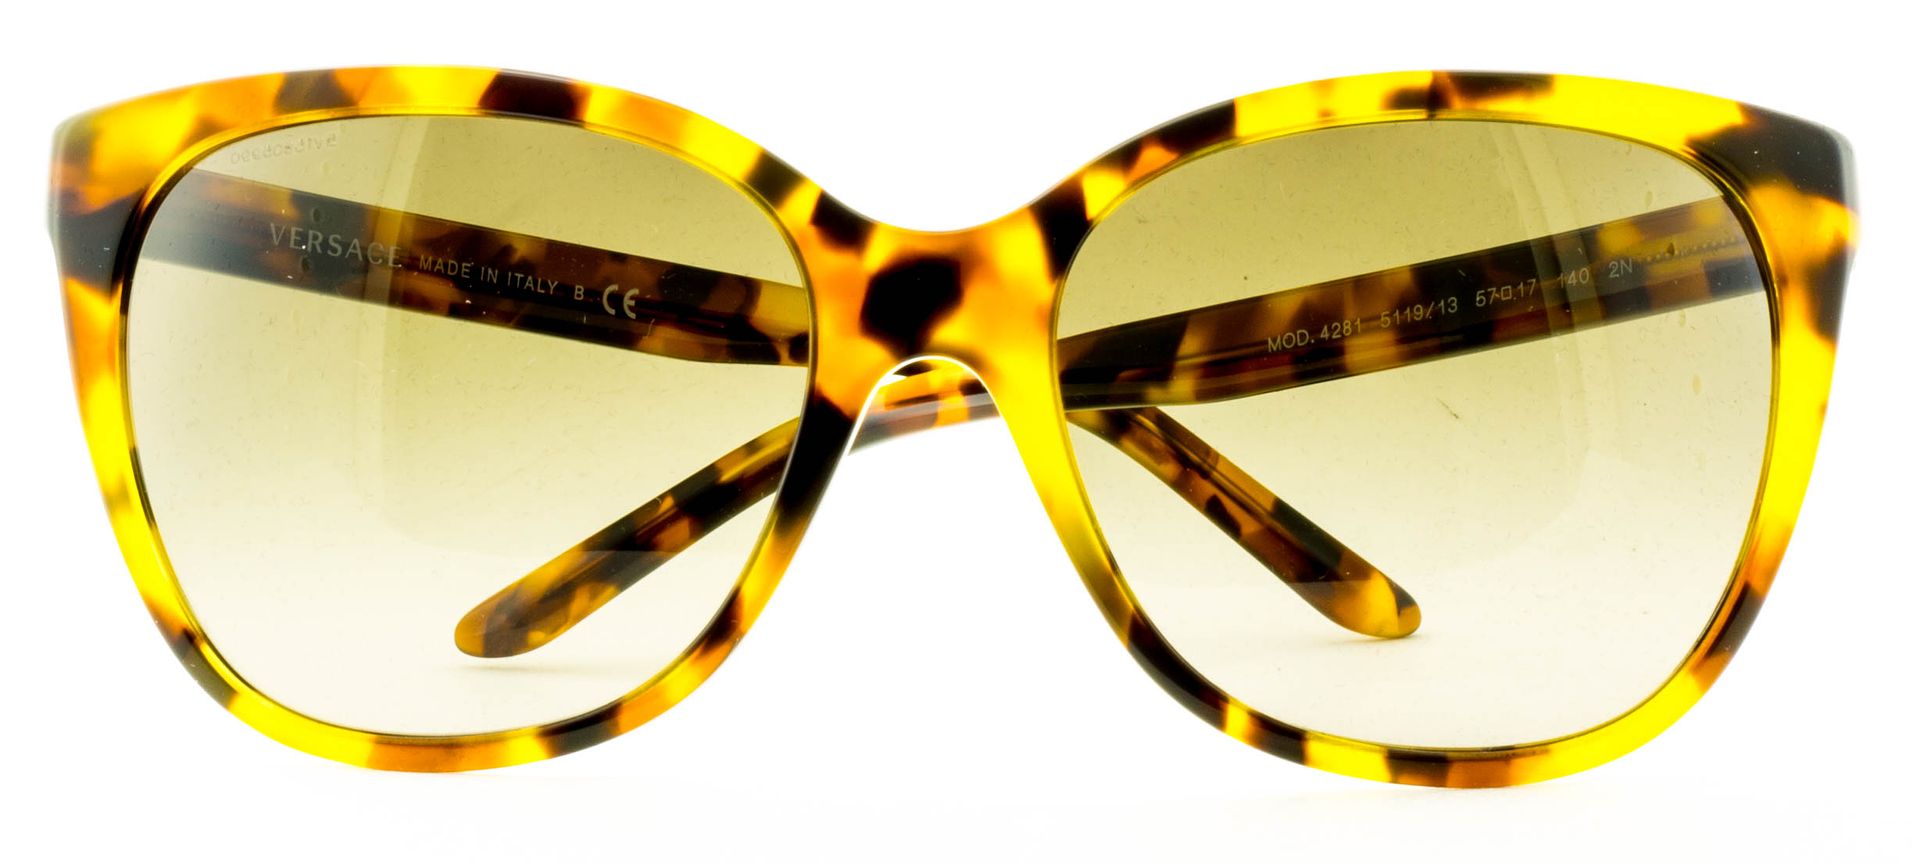 VERSACE MOD. 4281 5119/13 Sunglasses Shades Ladies BNIB Brand New in